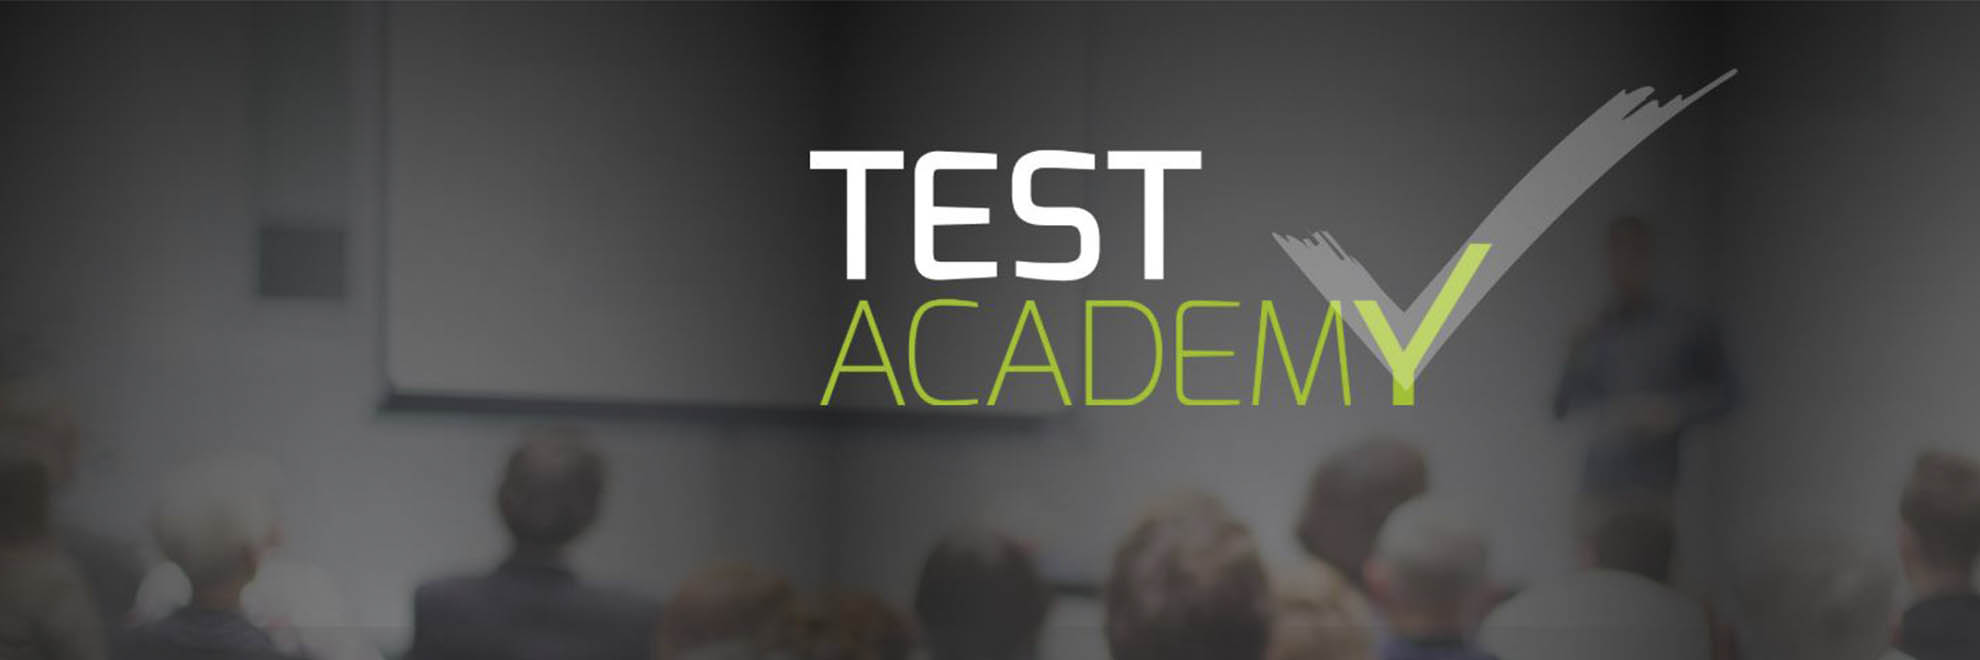 Test Academy Bcn